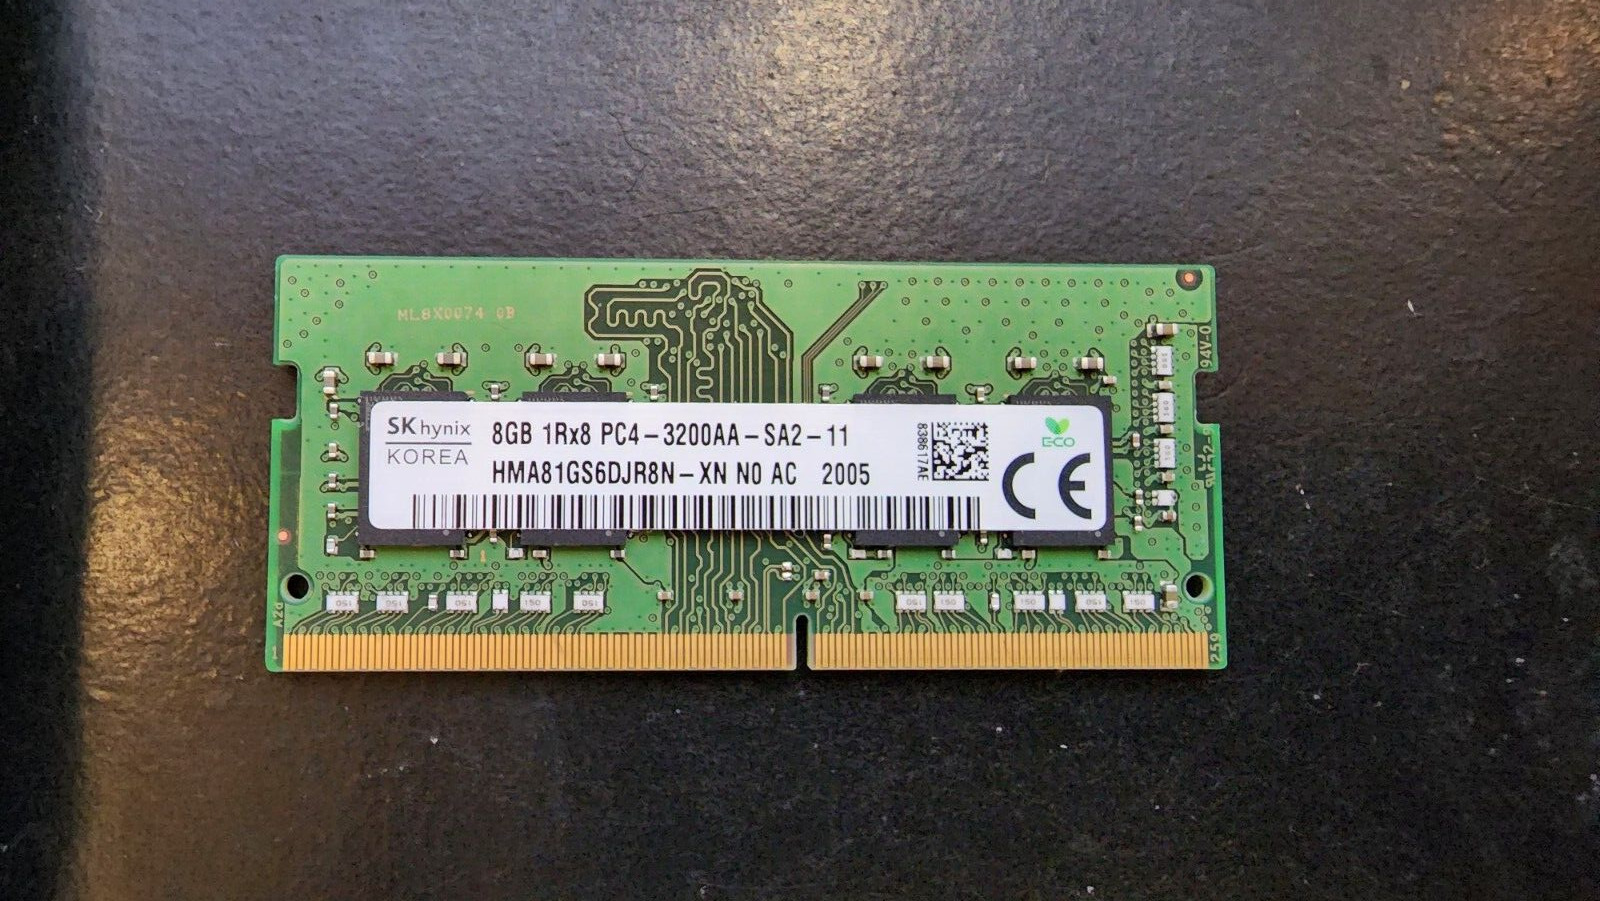 SK hynix 8GB DDR4 PC4-3200AA (PC4-25600) SODIMM Memory Module (5858)